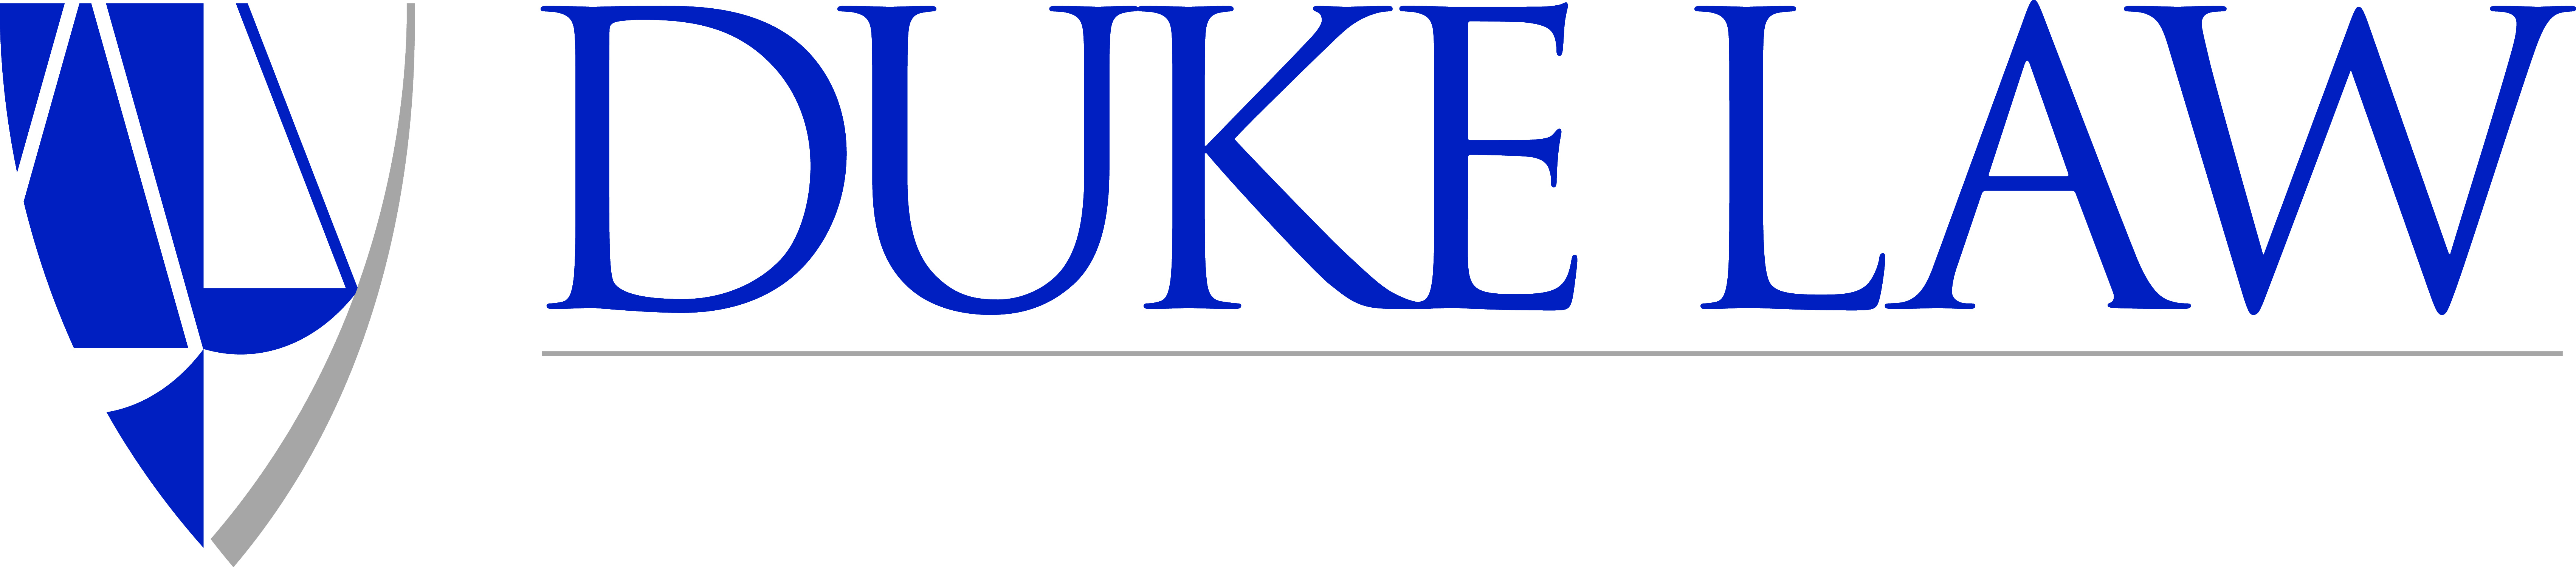 Duke University School of Law new